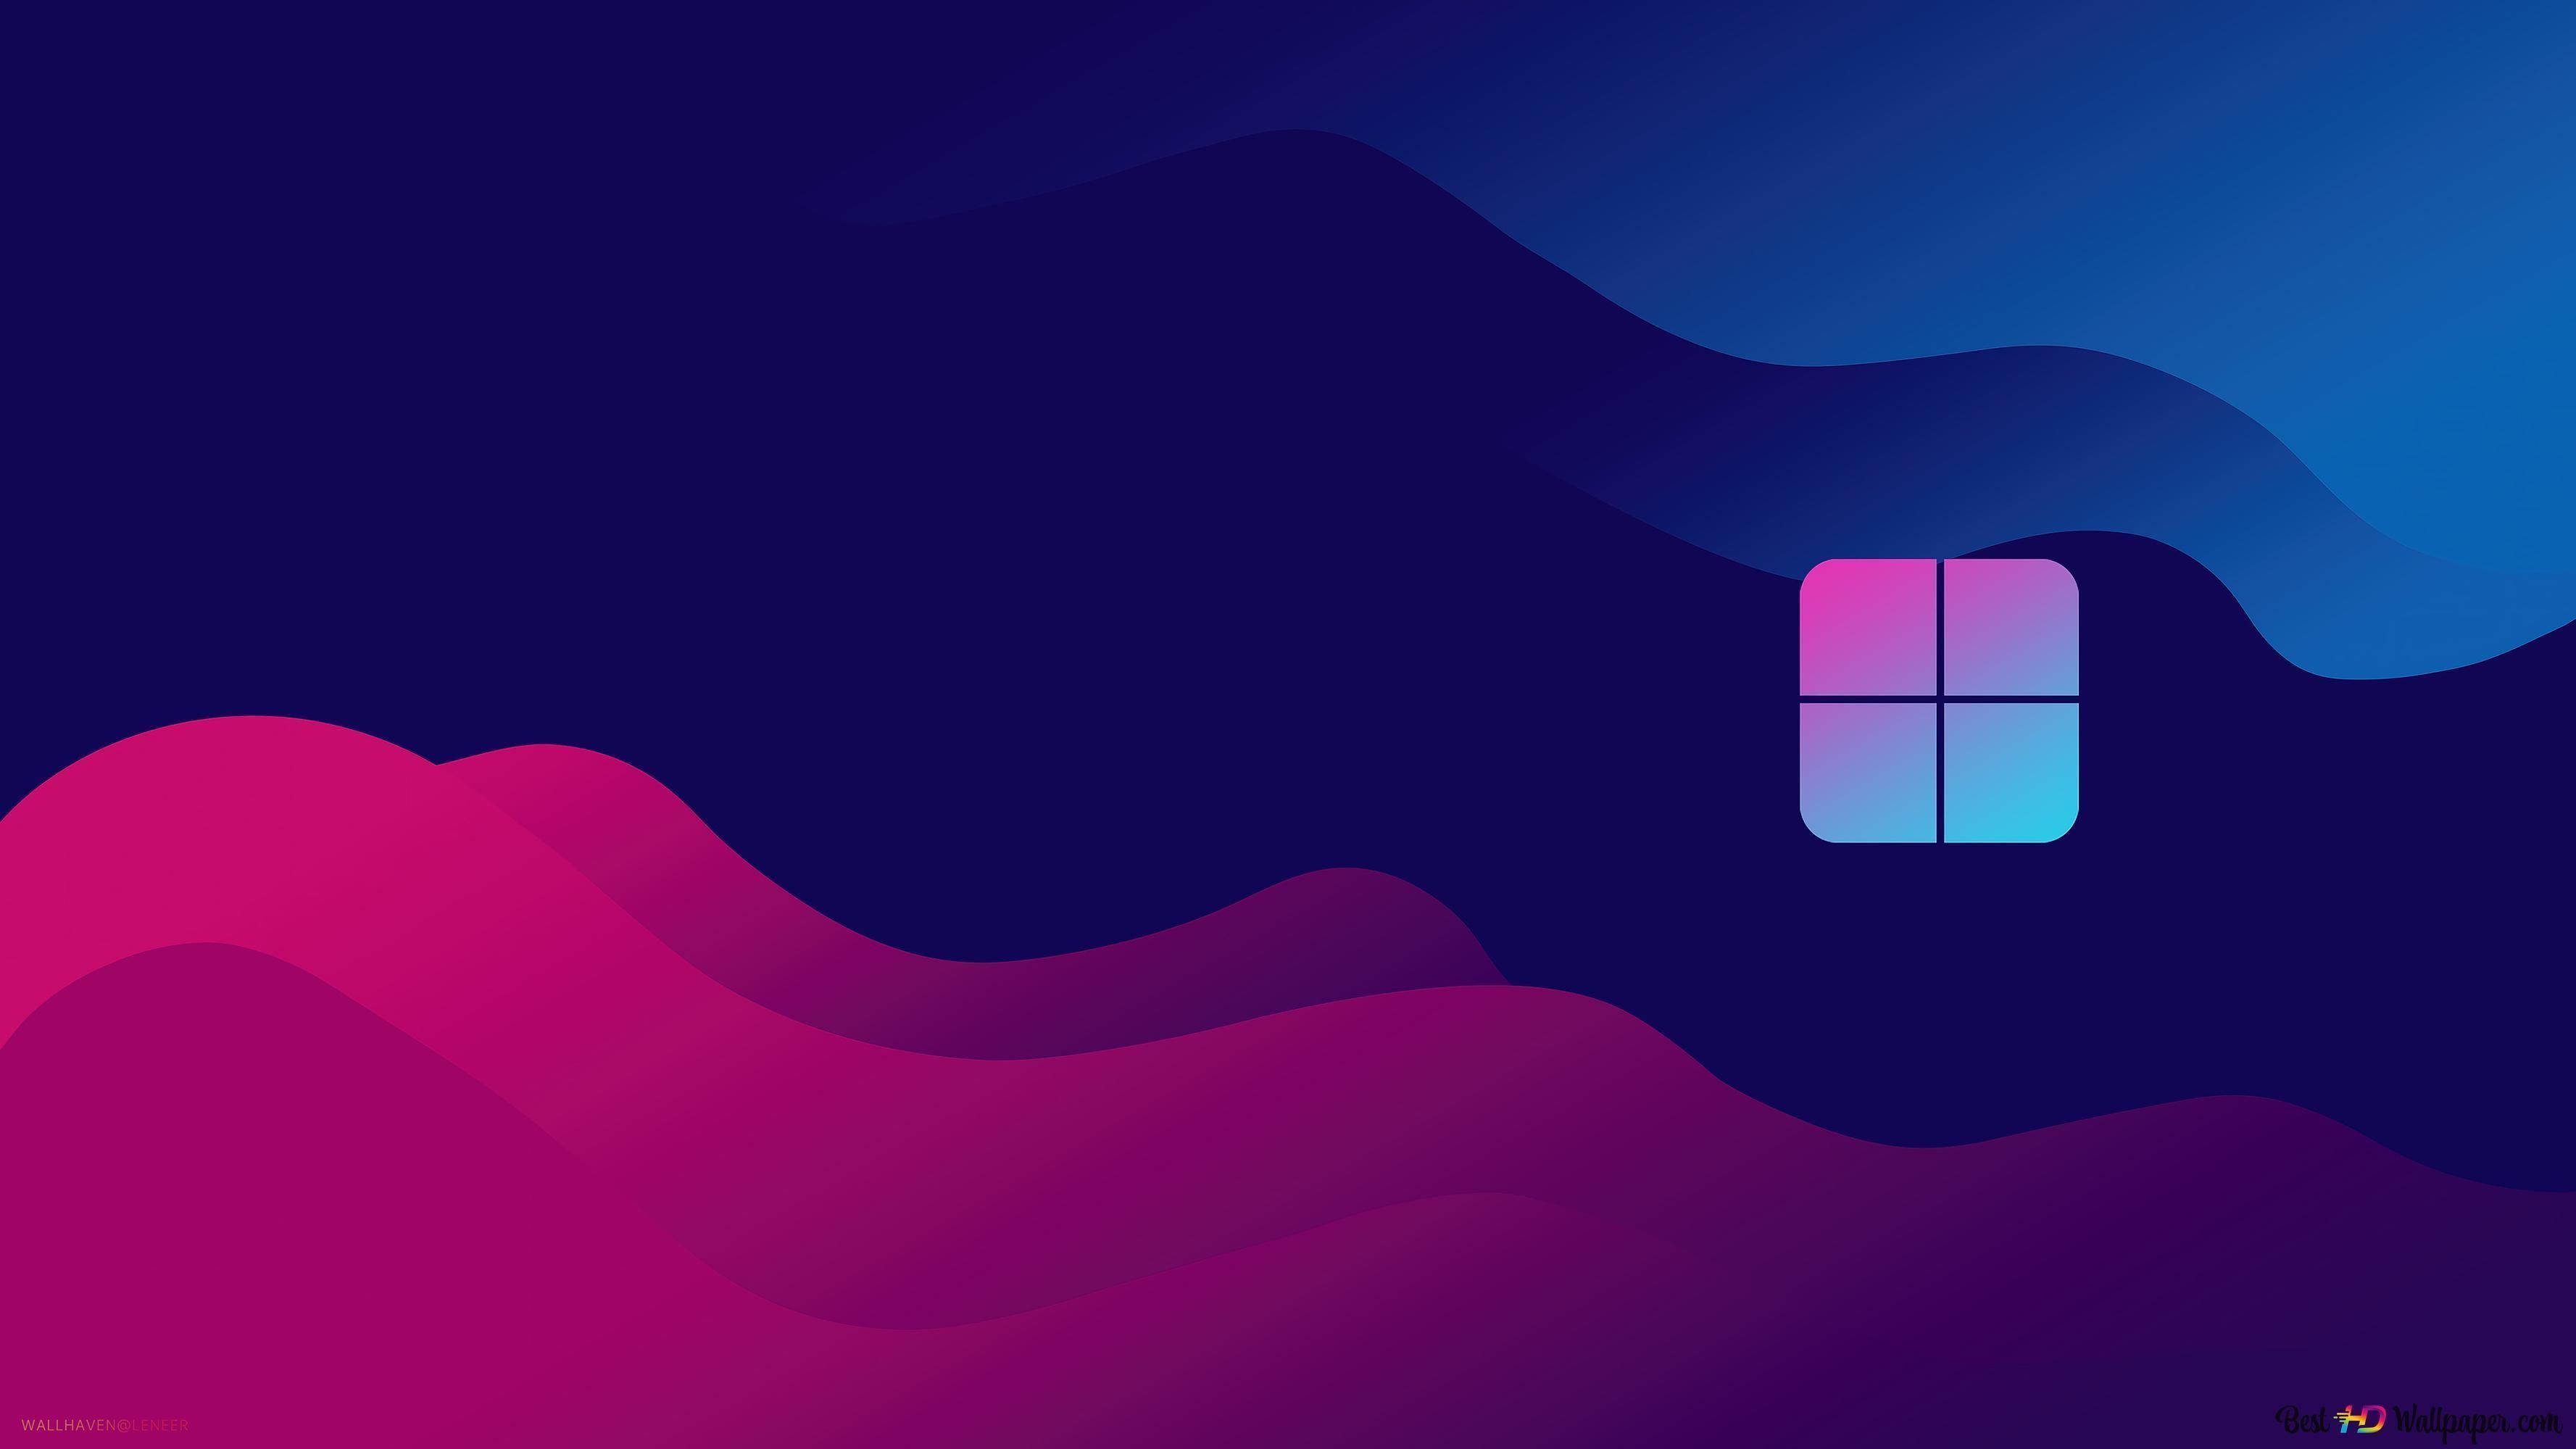 Windows 11 logo colorful 4K wallpaper download